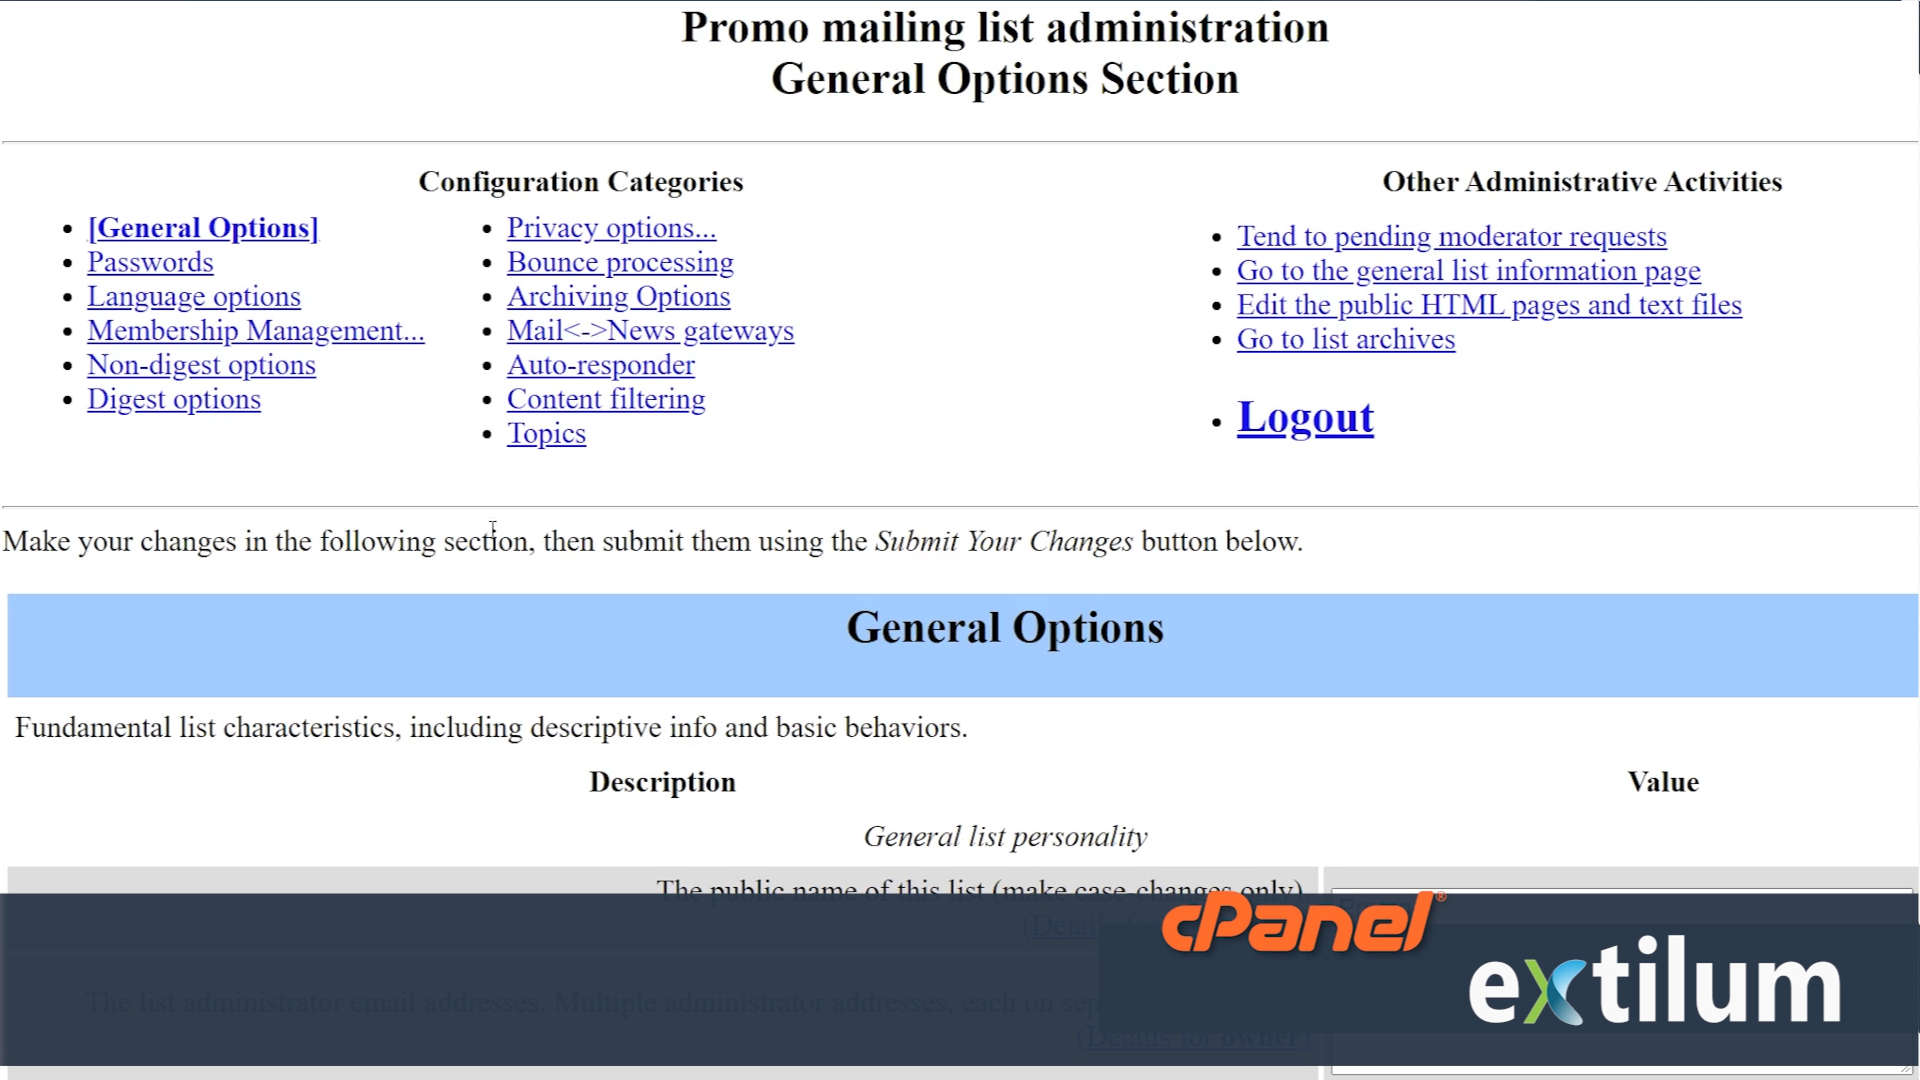 Extilum cPanel - Manage Mailing Lists